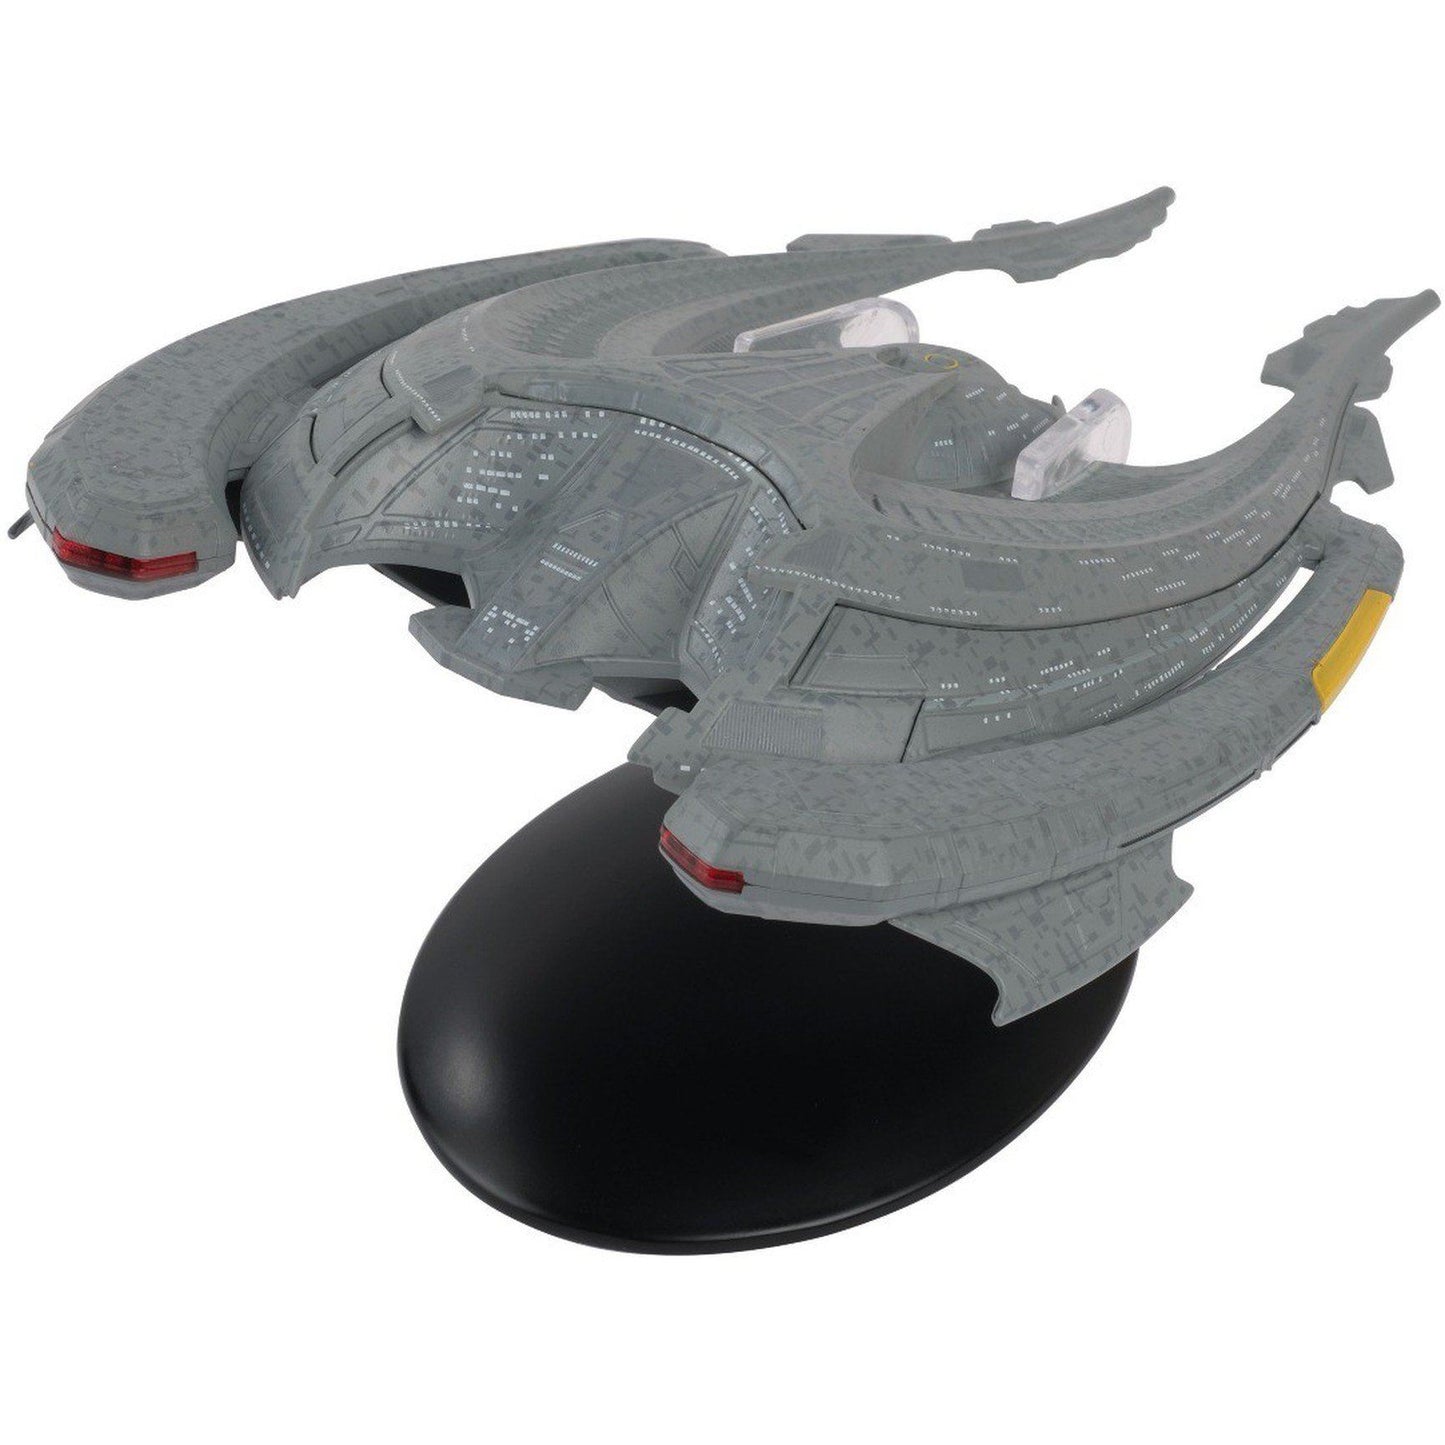 #19 S'Onar Flagship Model Navire moulé sous pression Star Trek